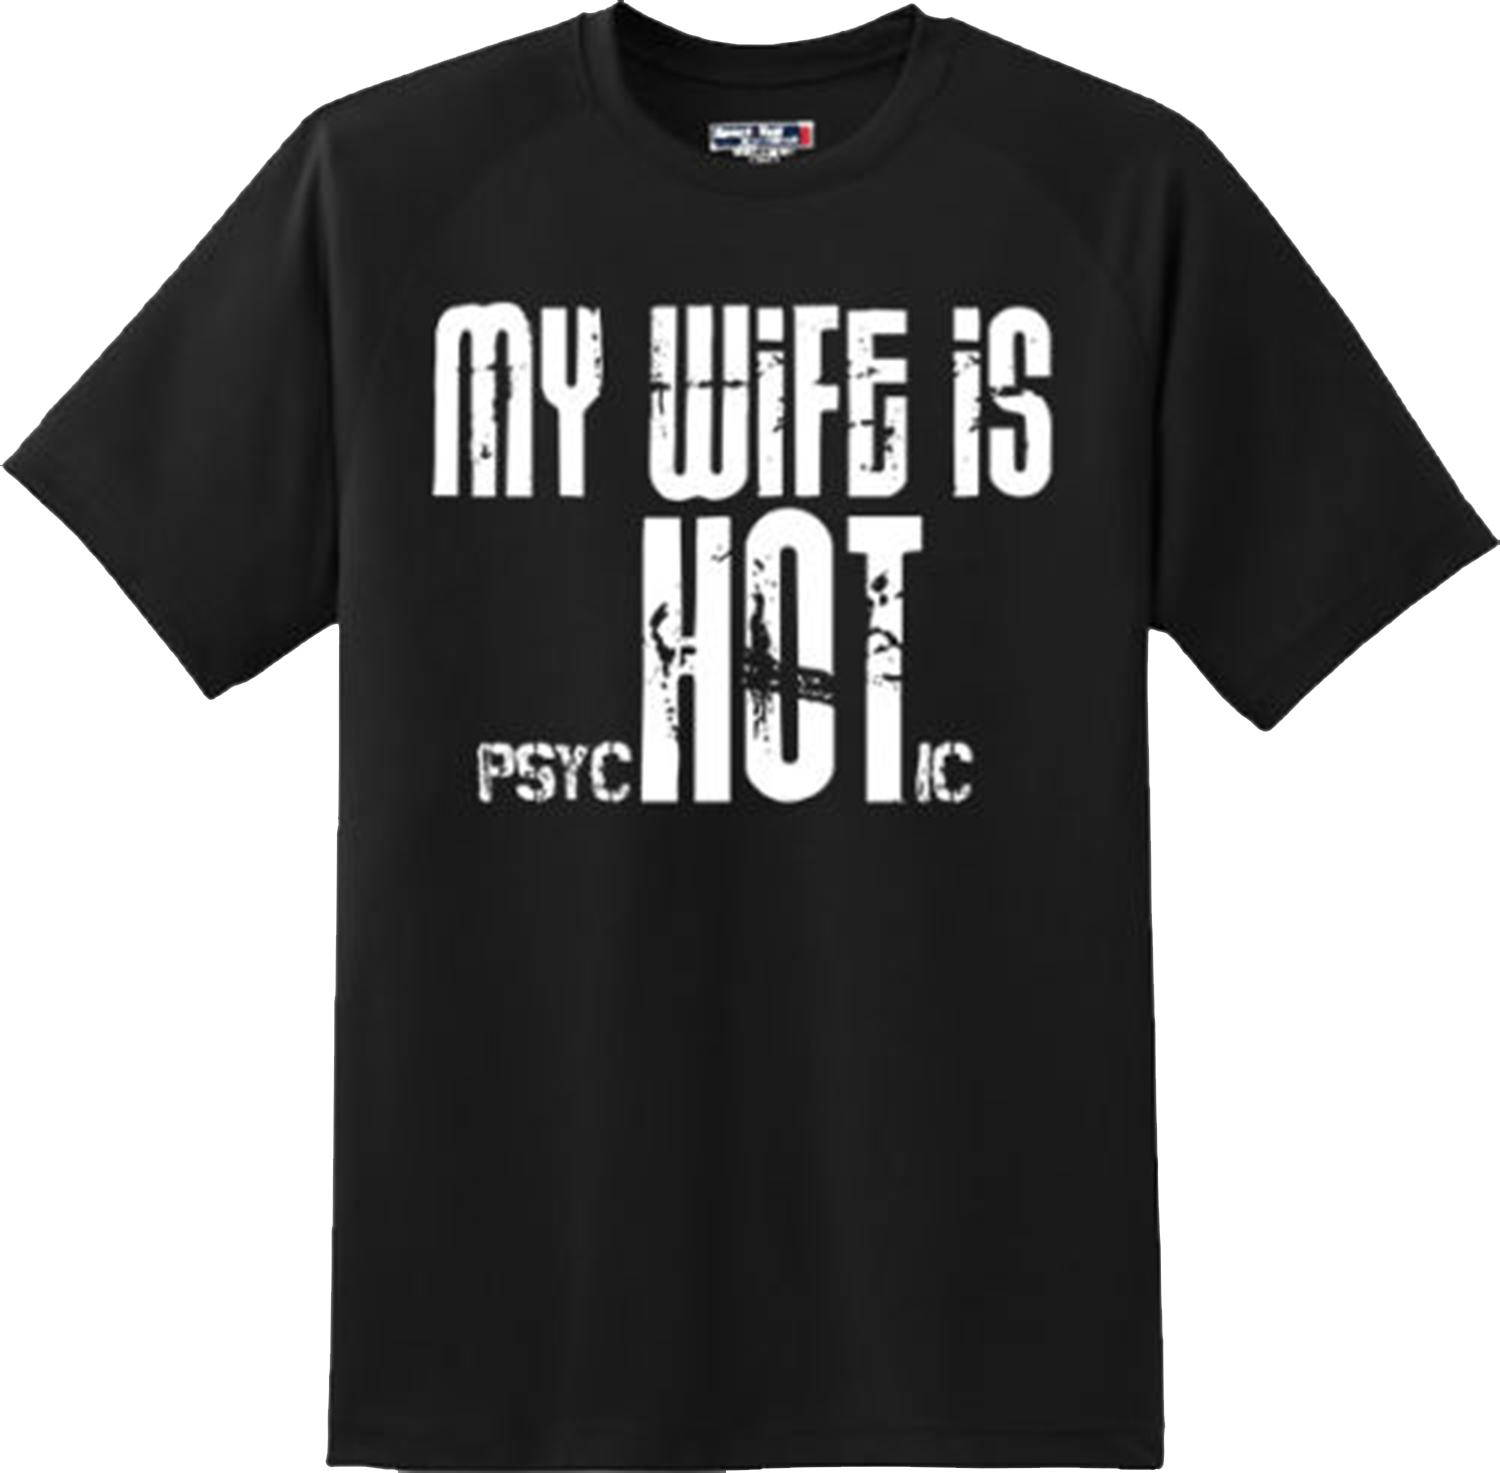 Funny My Wife is Hot Rude Adult Husband Humor Gift TShirt New Graphic Tee